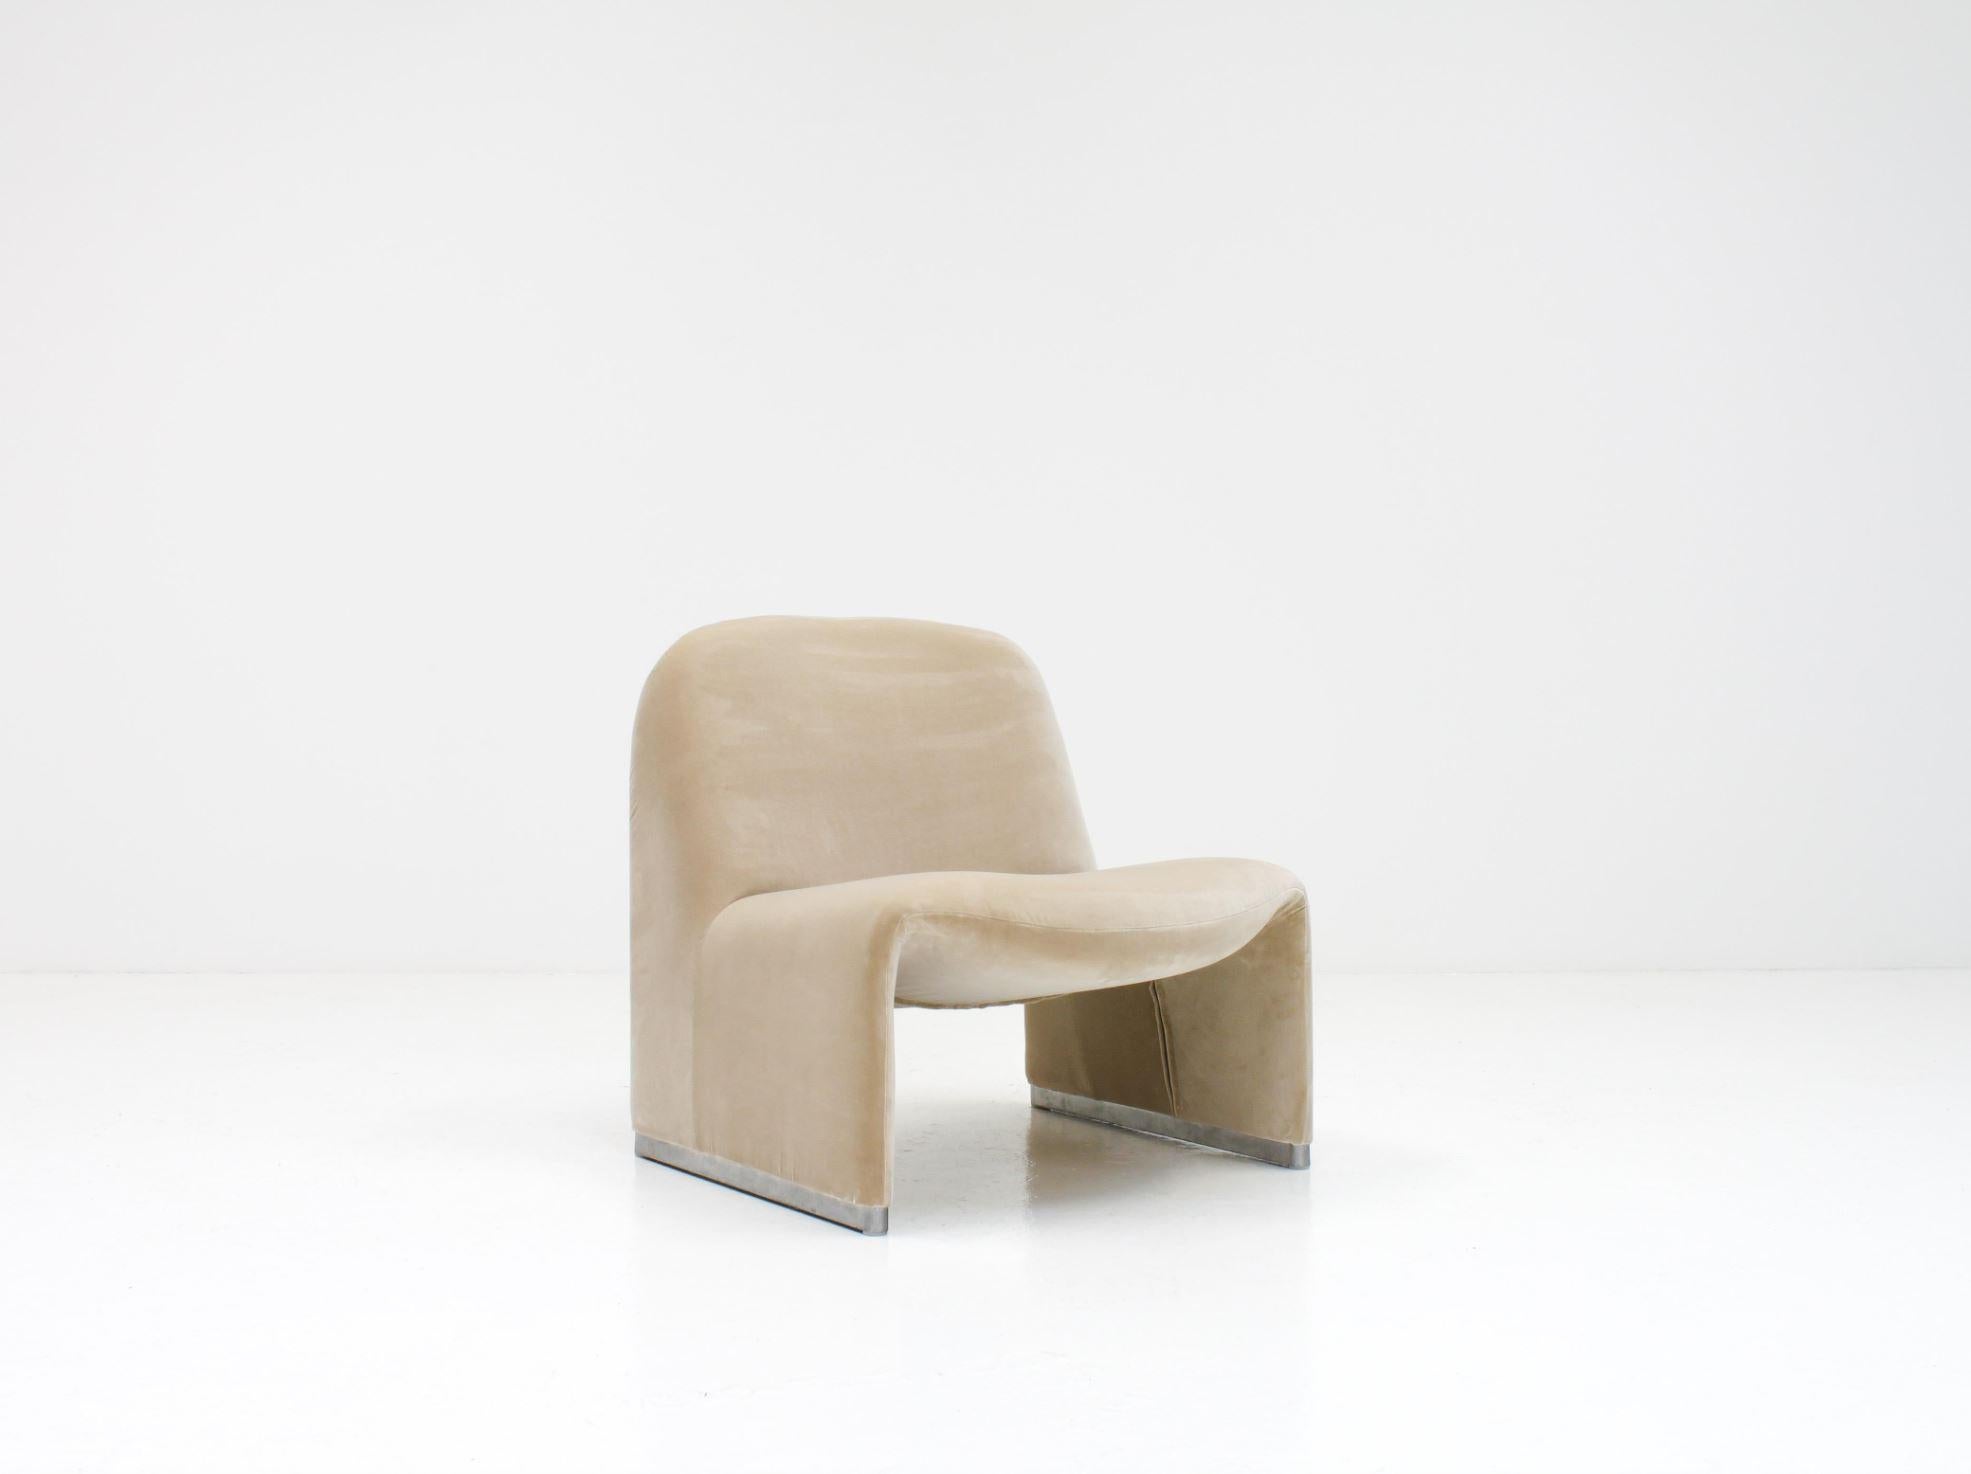 Steel Giancarlo Piretti “Alky” Chair in New Velvet, Artifort, 1970s, *Customizable* For Sale